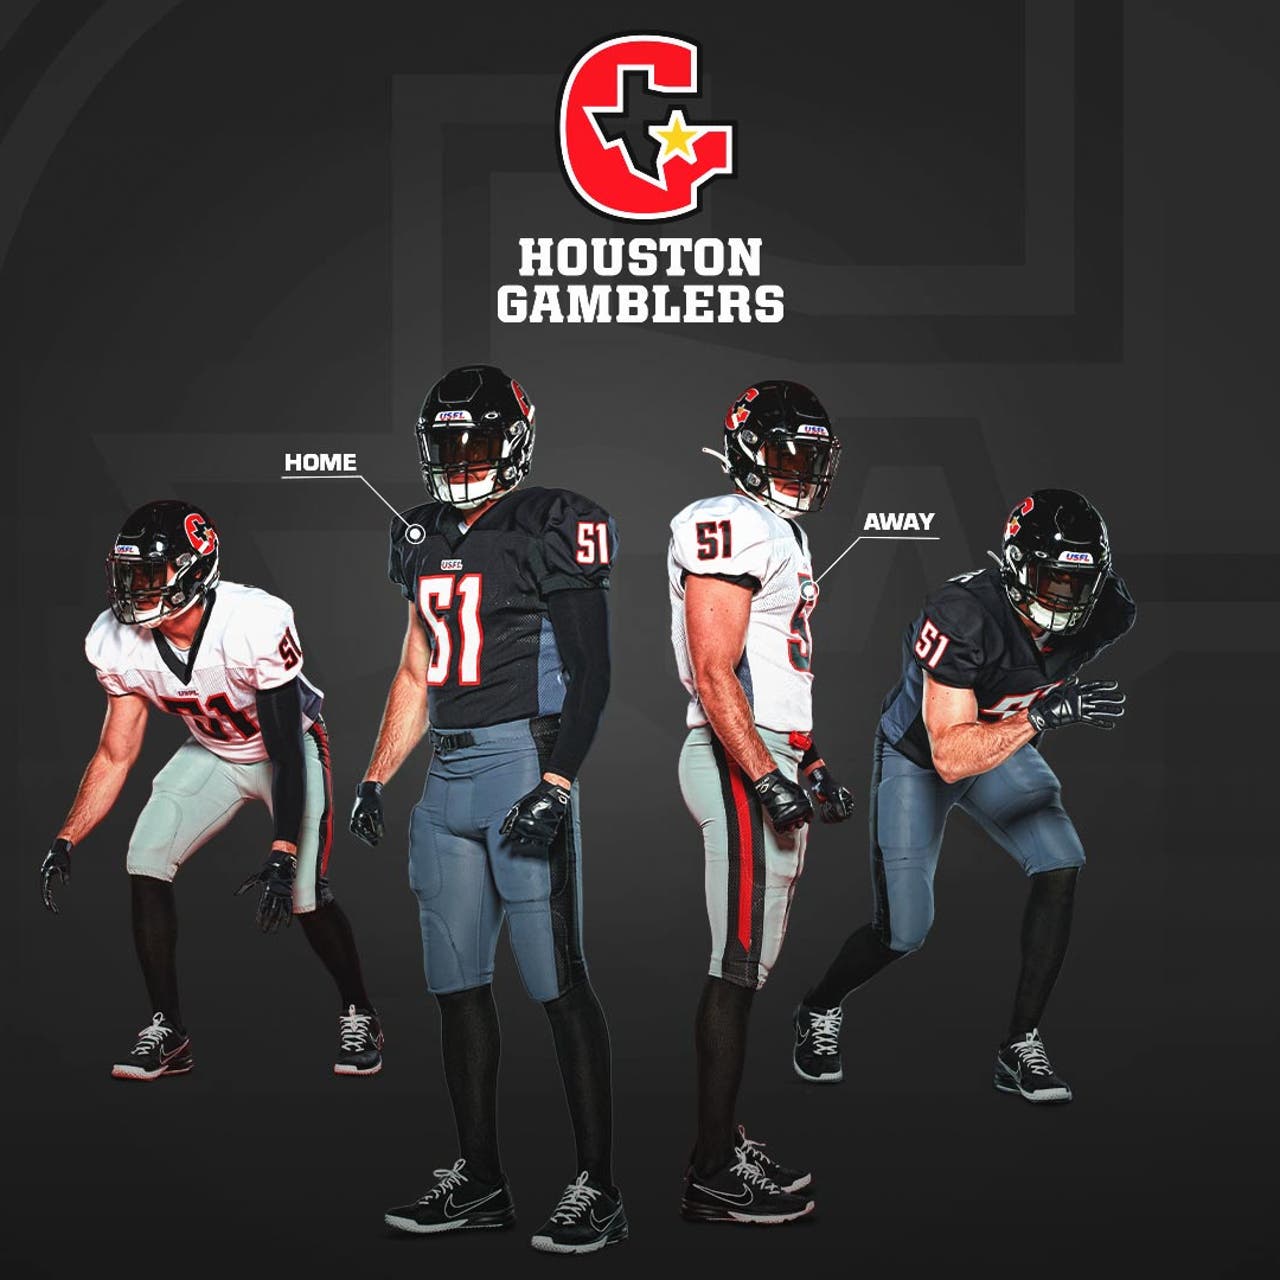 USFL Houston Gamblers Uniform Reveal: First look at jerseys, helmets